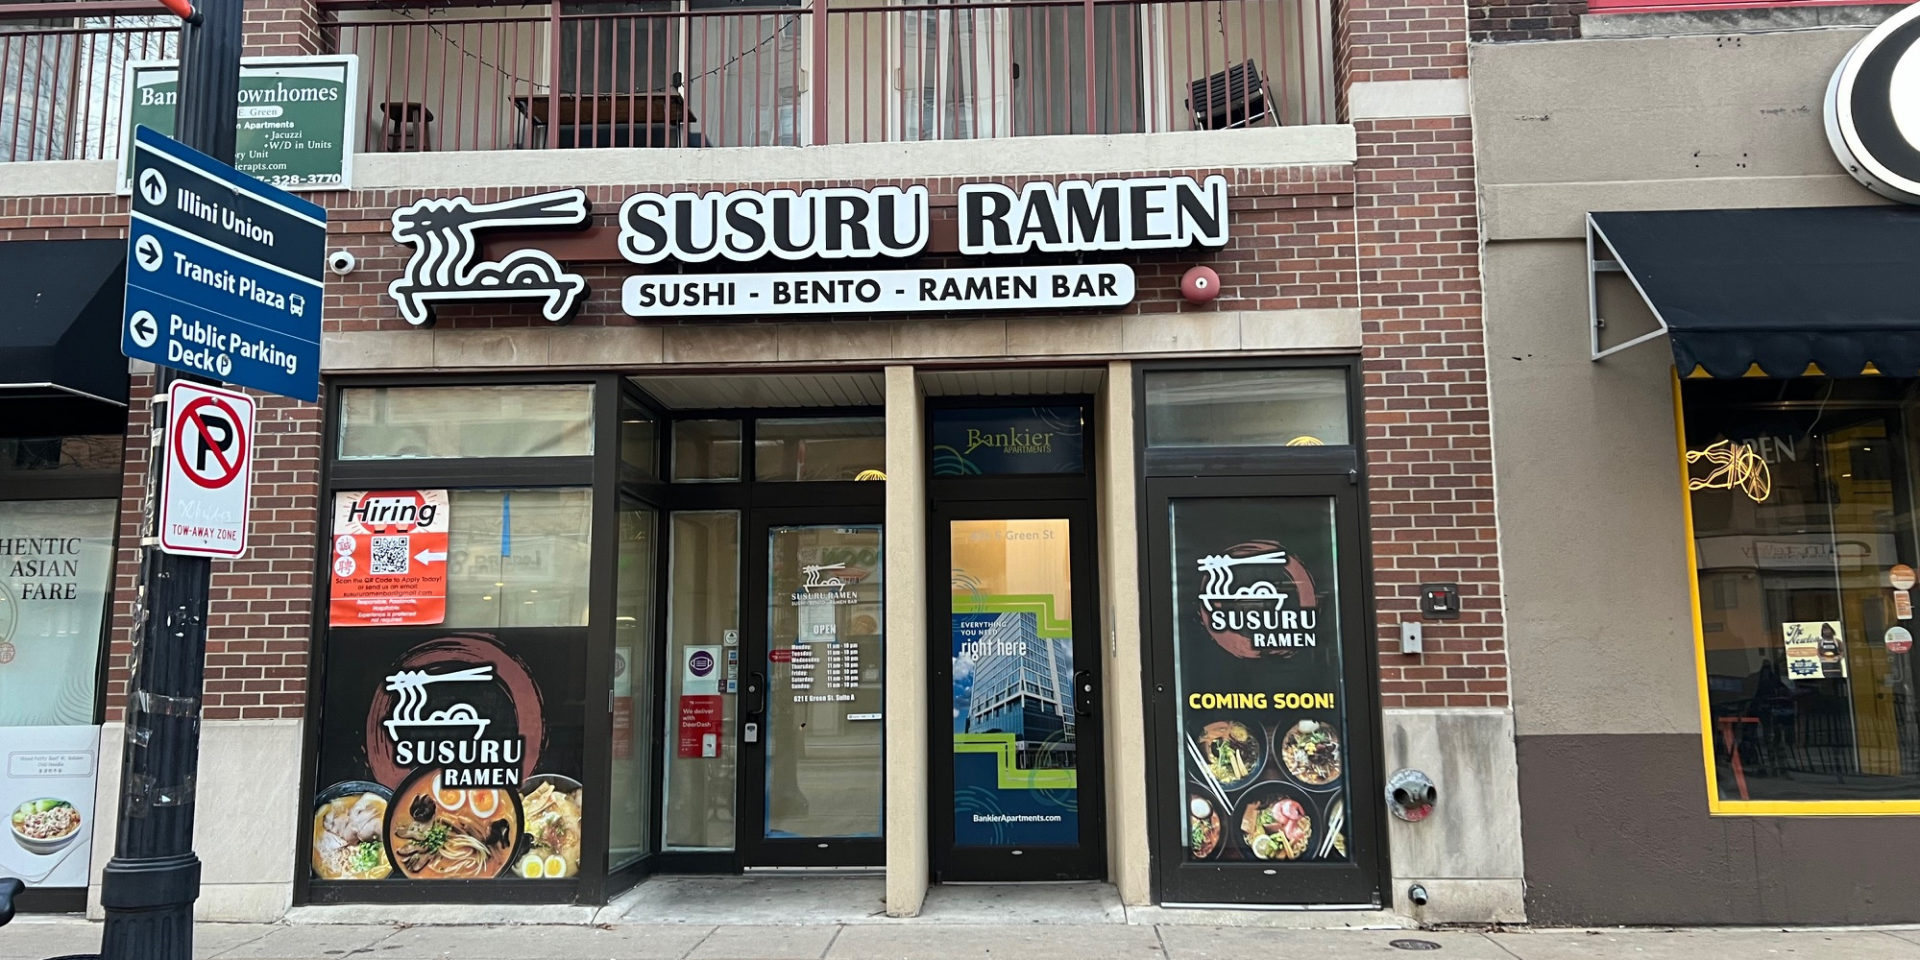 The exterior of Green Street's new Susuru Ramen restaurant.